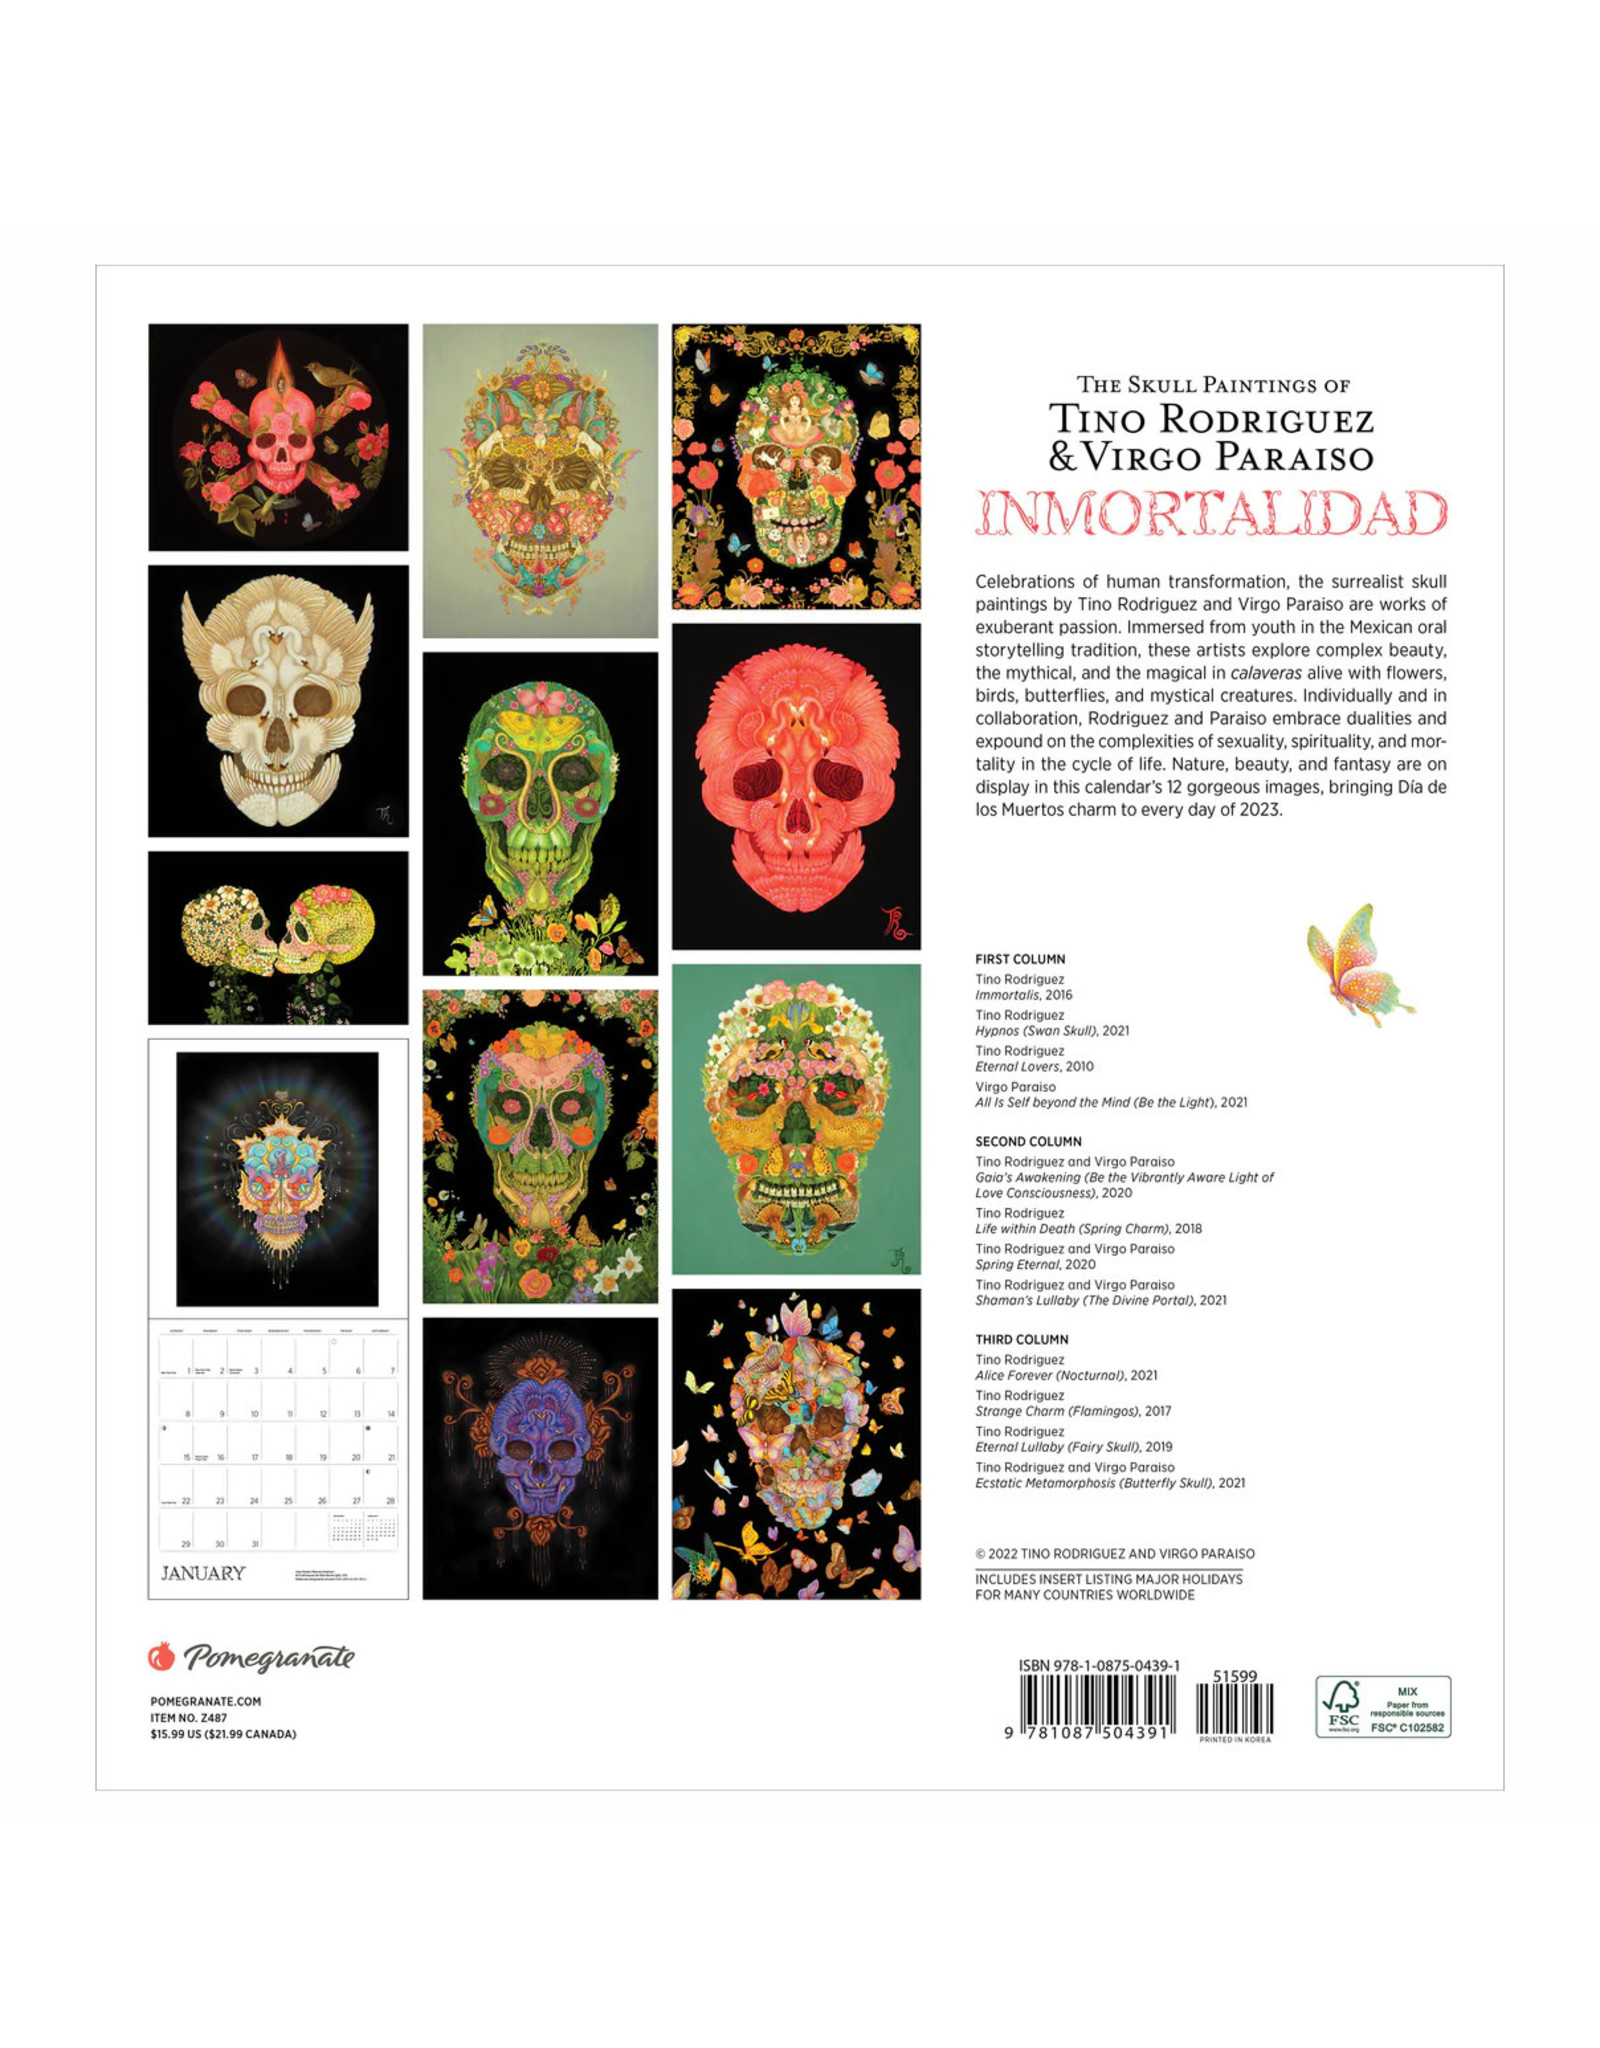 Pomegranate Inmortalidad: The Skull Paintings of Tino Rodriguez and Virgo Paraiso 2023 Wall Calendar